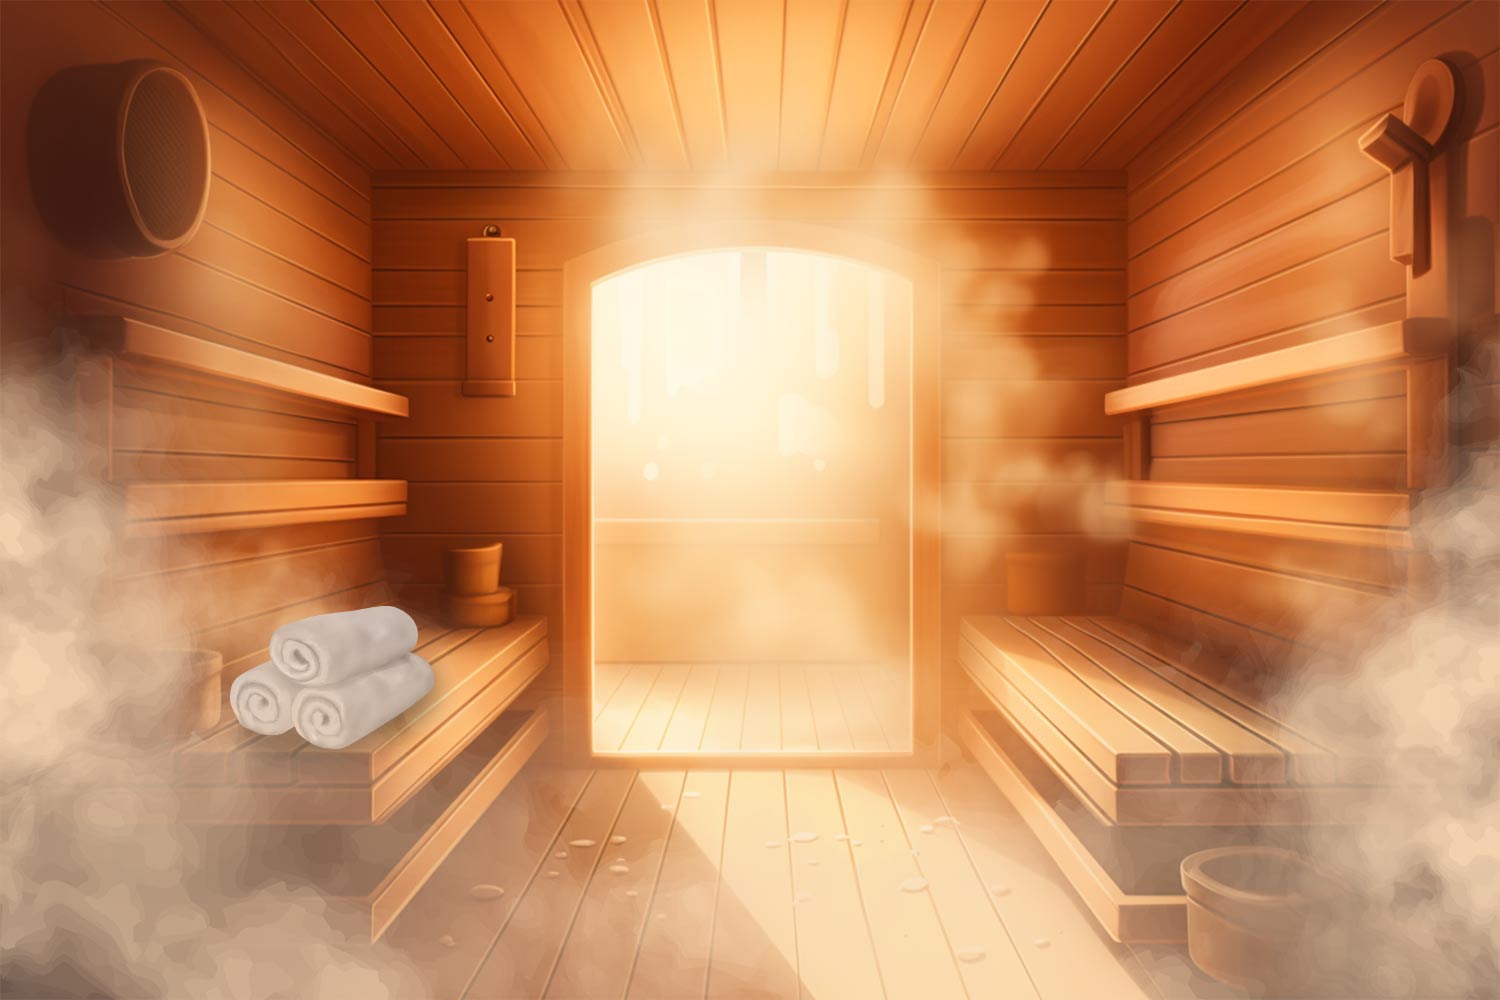 Illustration of the interior of a sauna